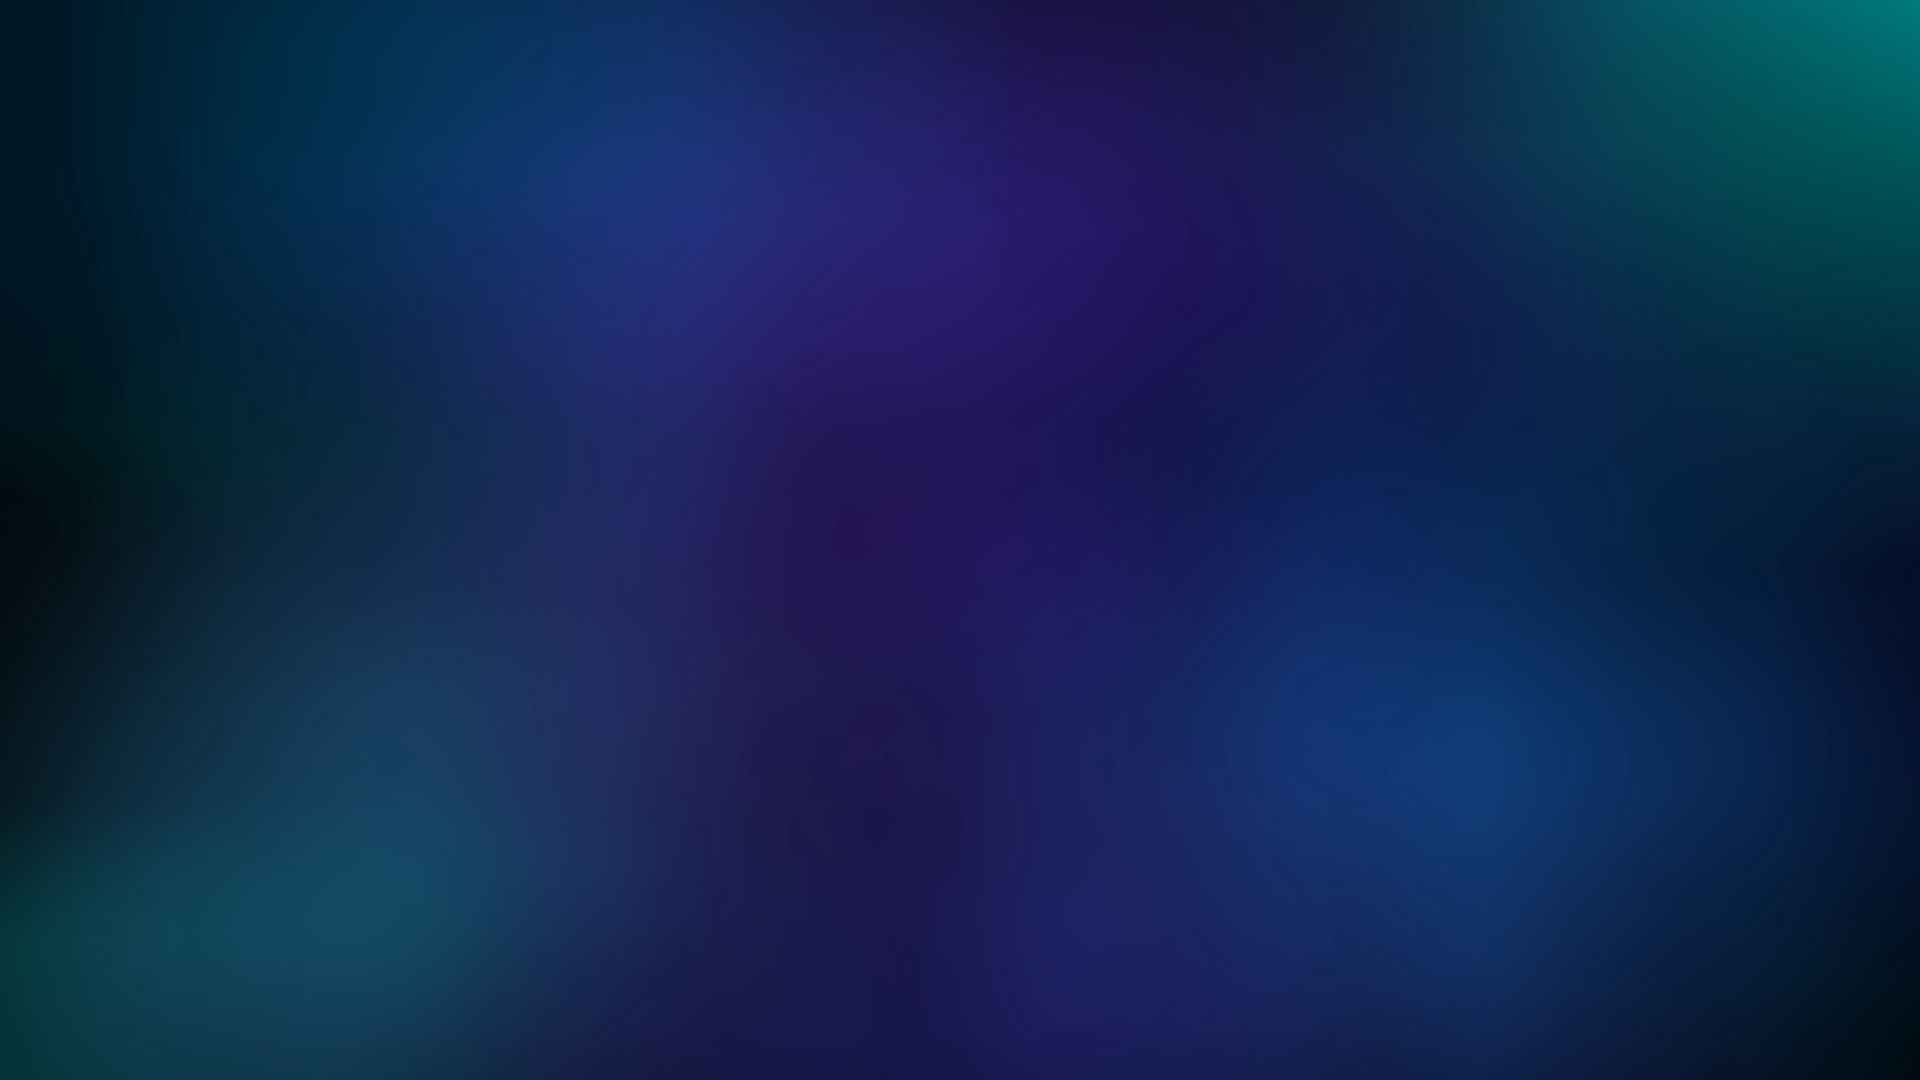 Wallpaper Glare, Light, Blurry, Dark - Blurry Background 1080p - HD Wallpaper 